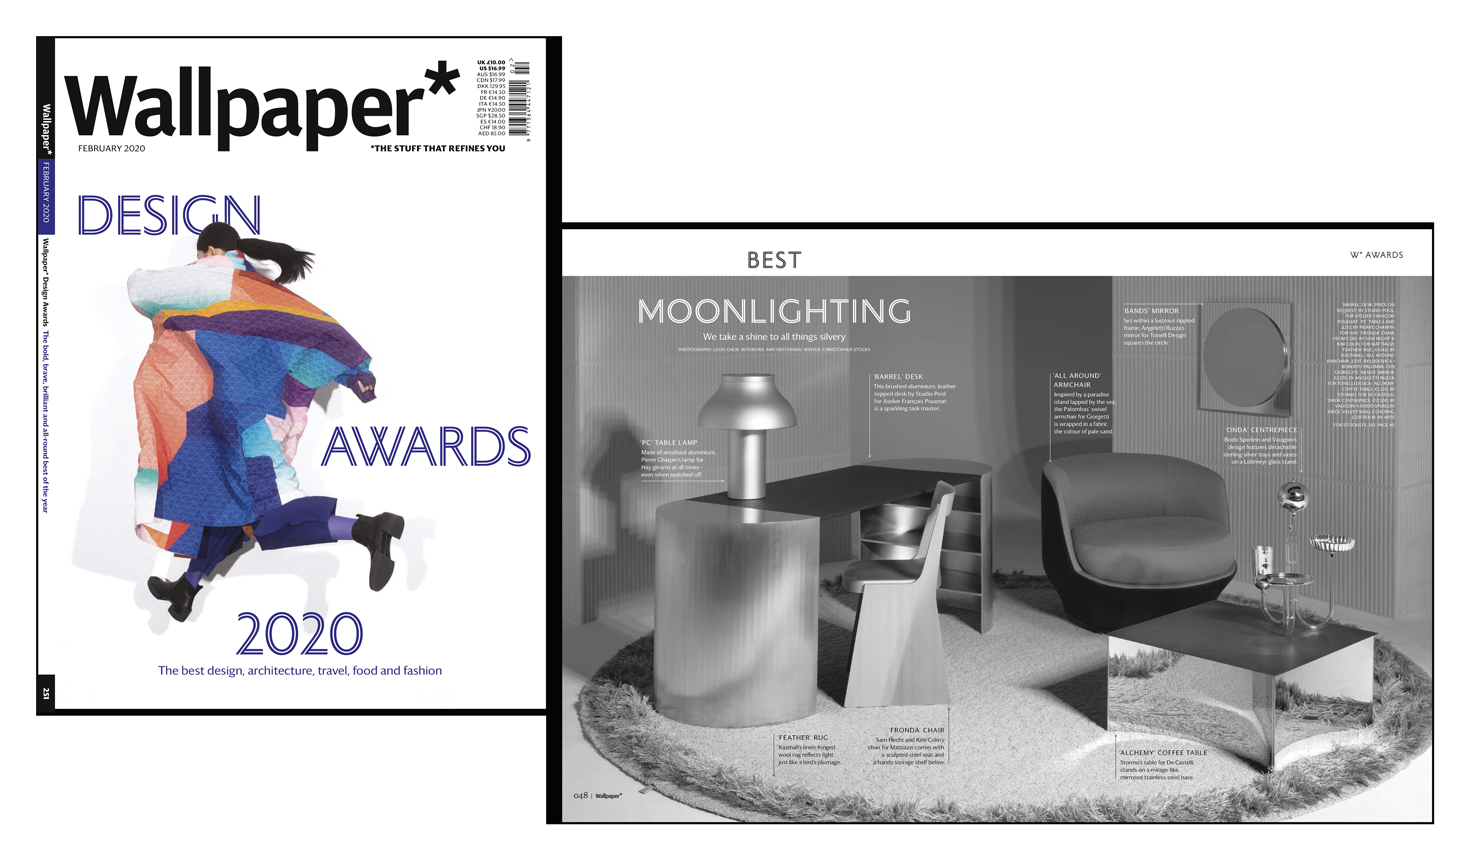 All Around is Best Moonlighting at Wallpaper Design Awards 2020 2